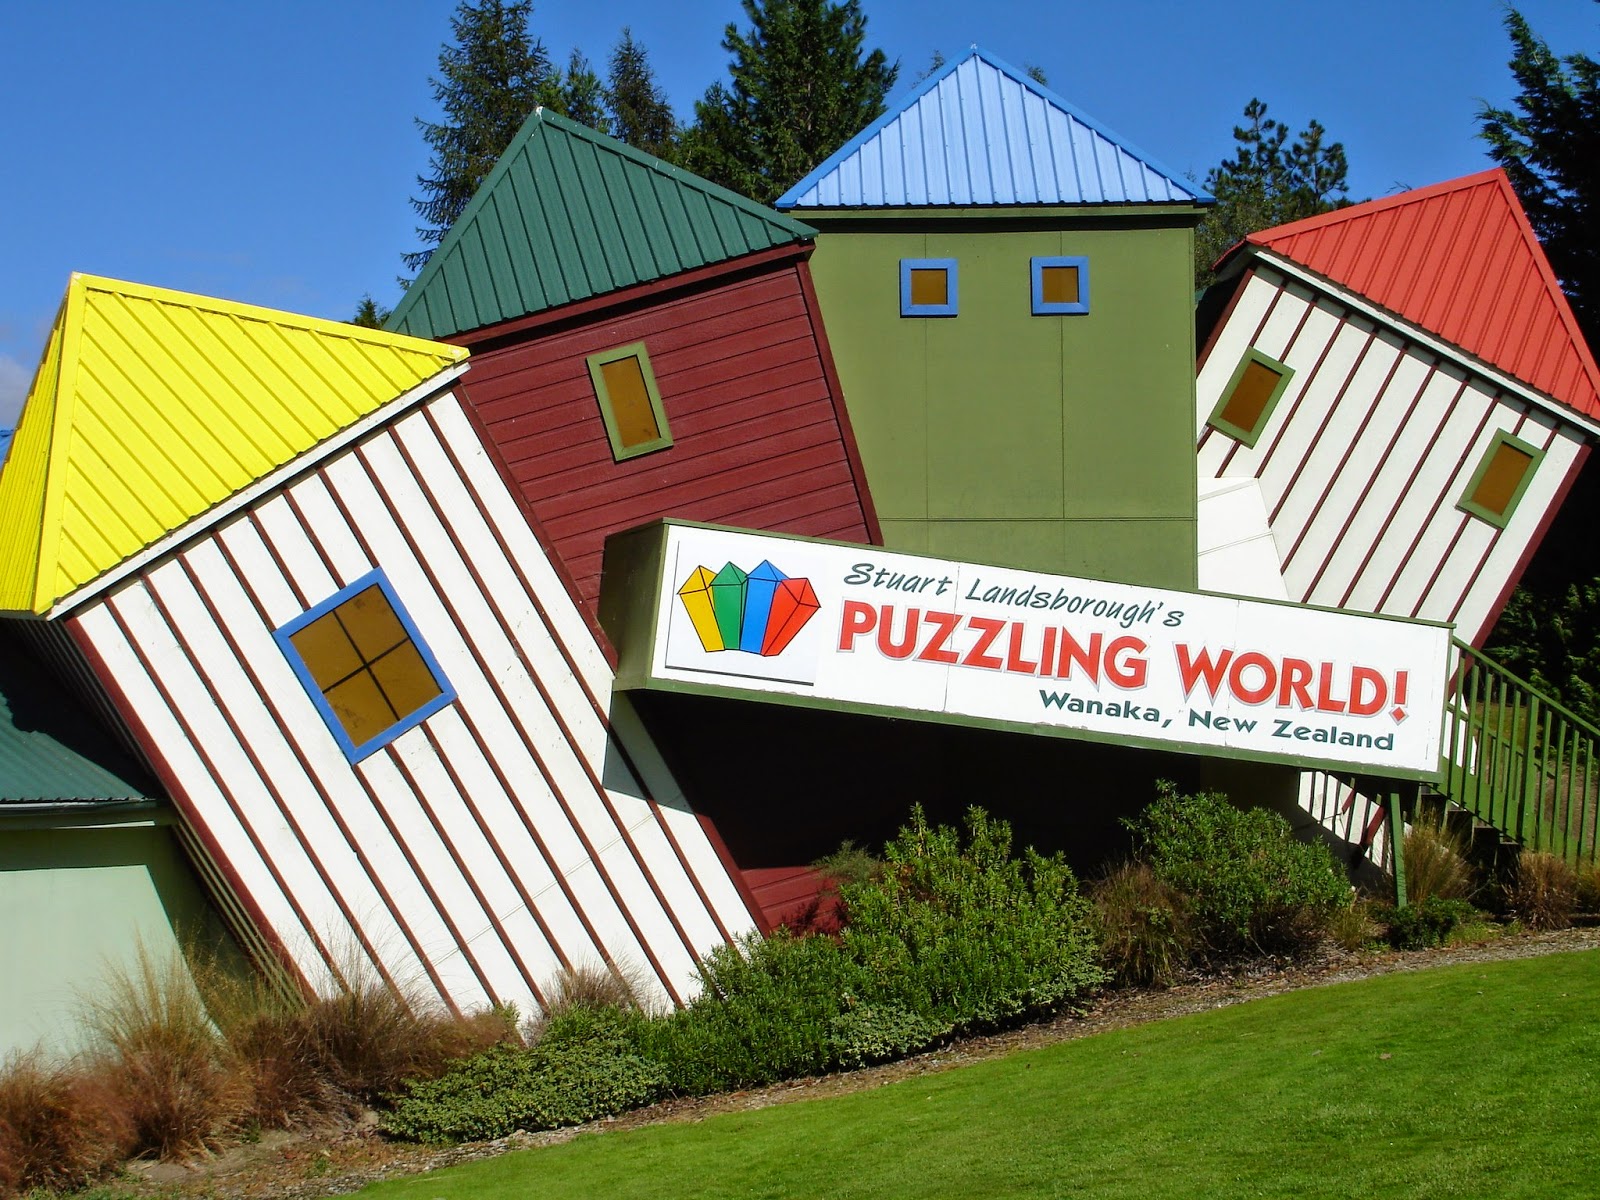 Puzzling World wanaka of New Zealand